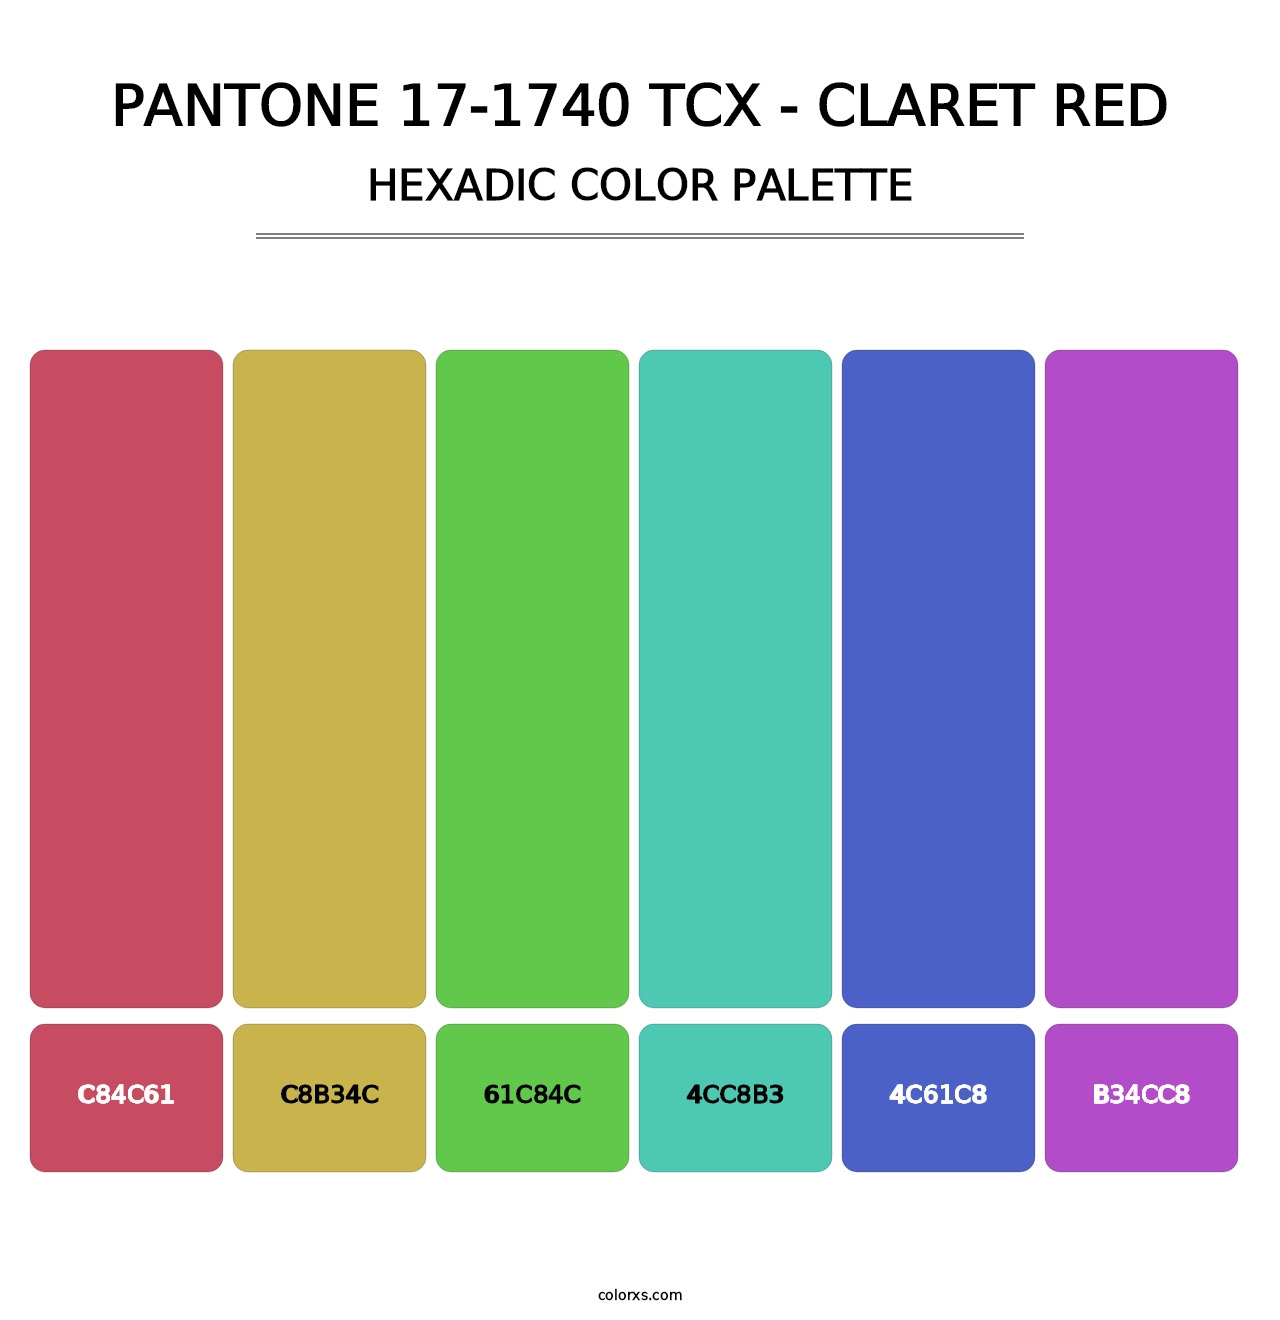 PANTONE 17-1740 TCX - Claret Red - Hexadic Color Palette